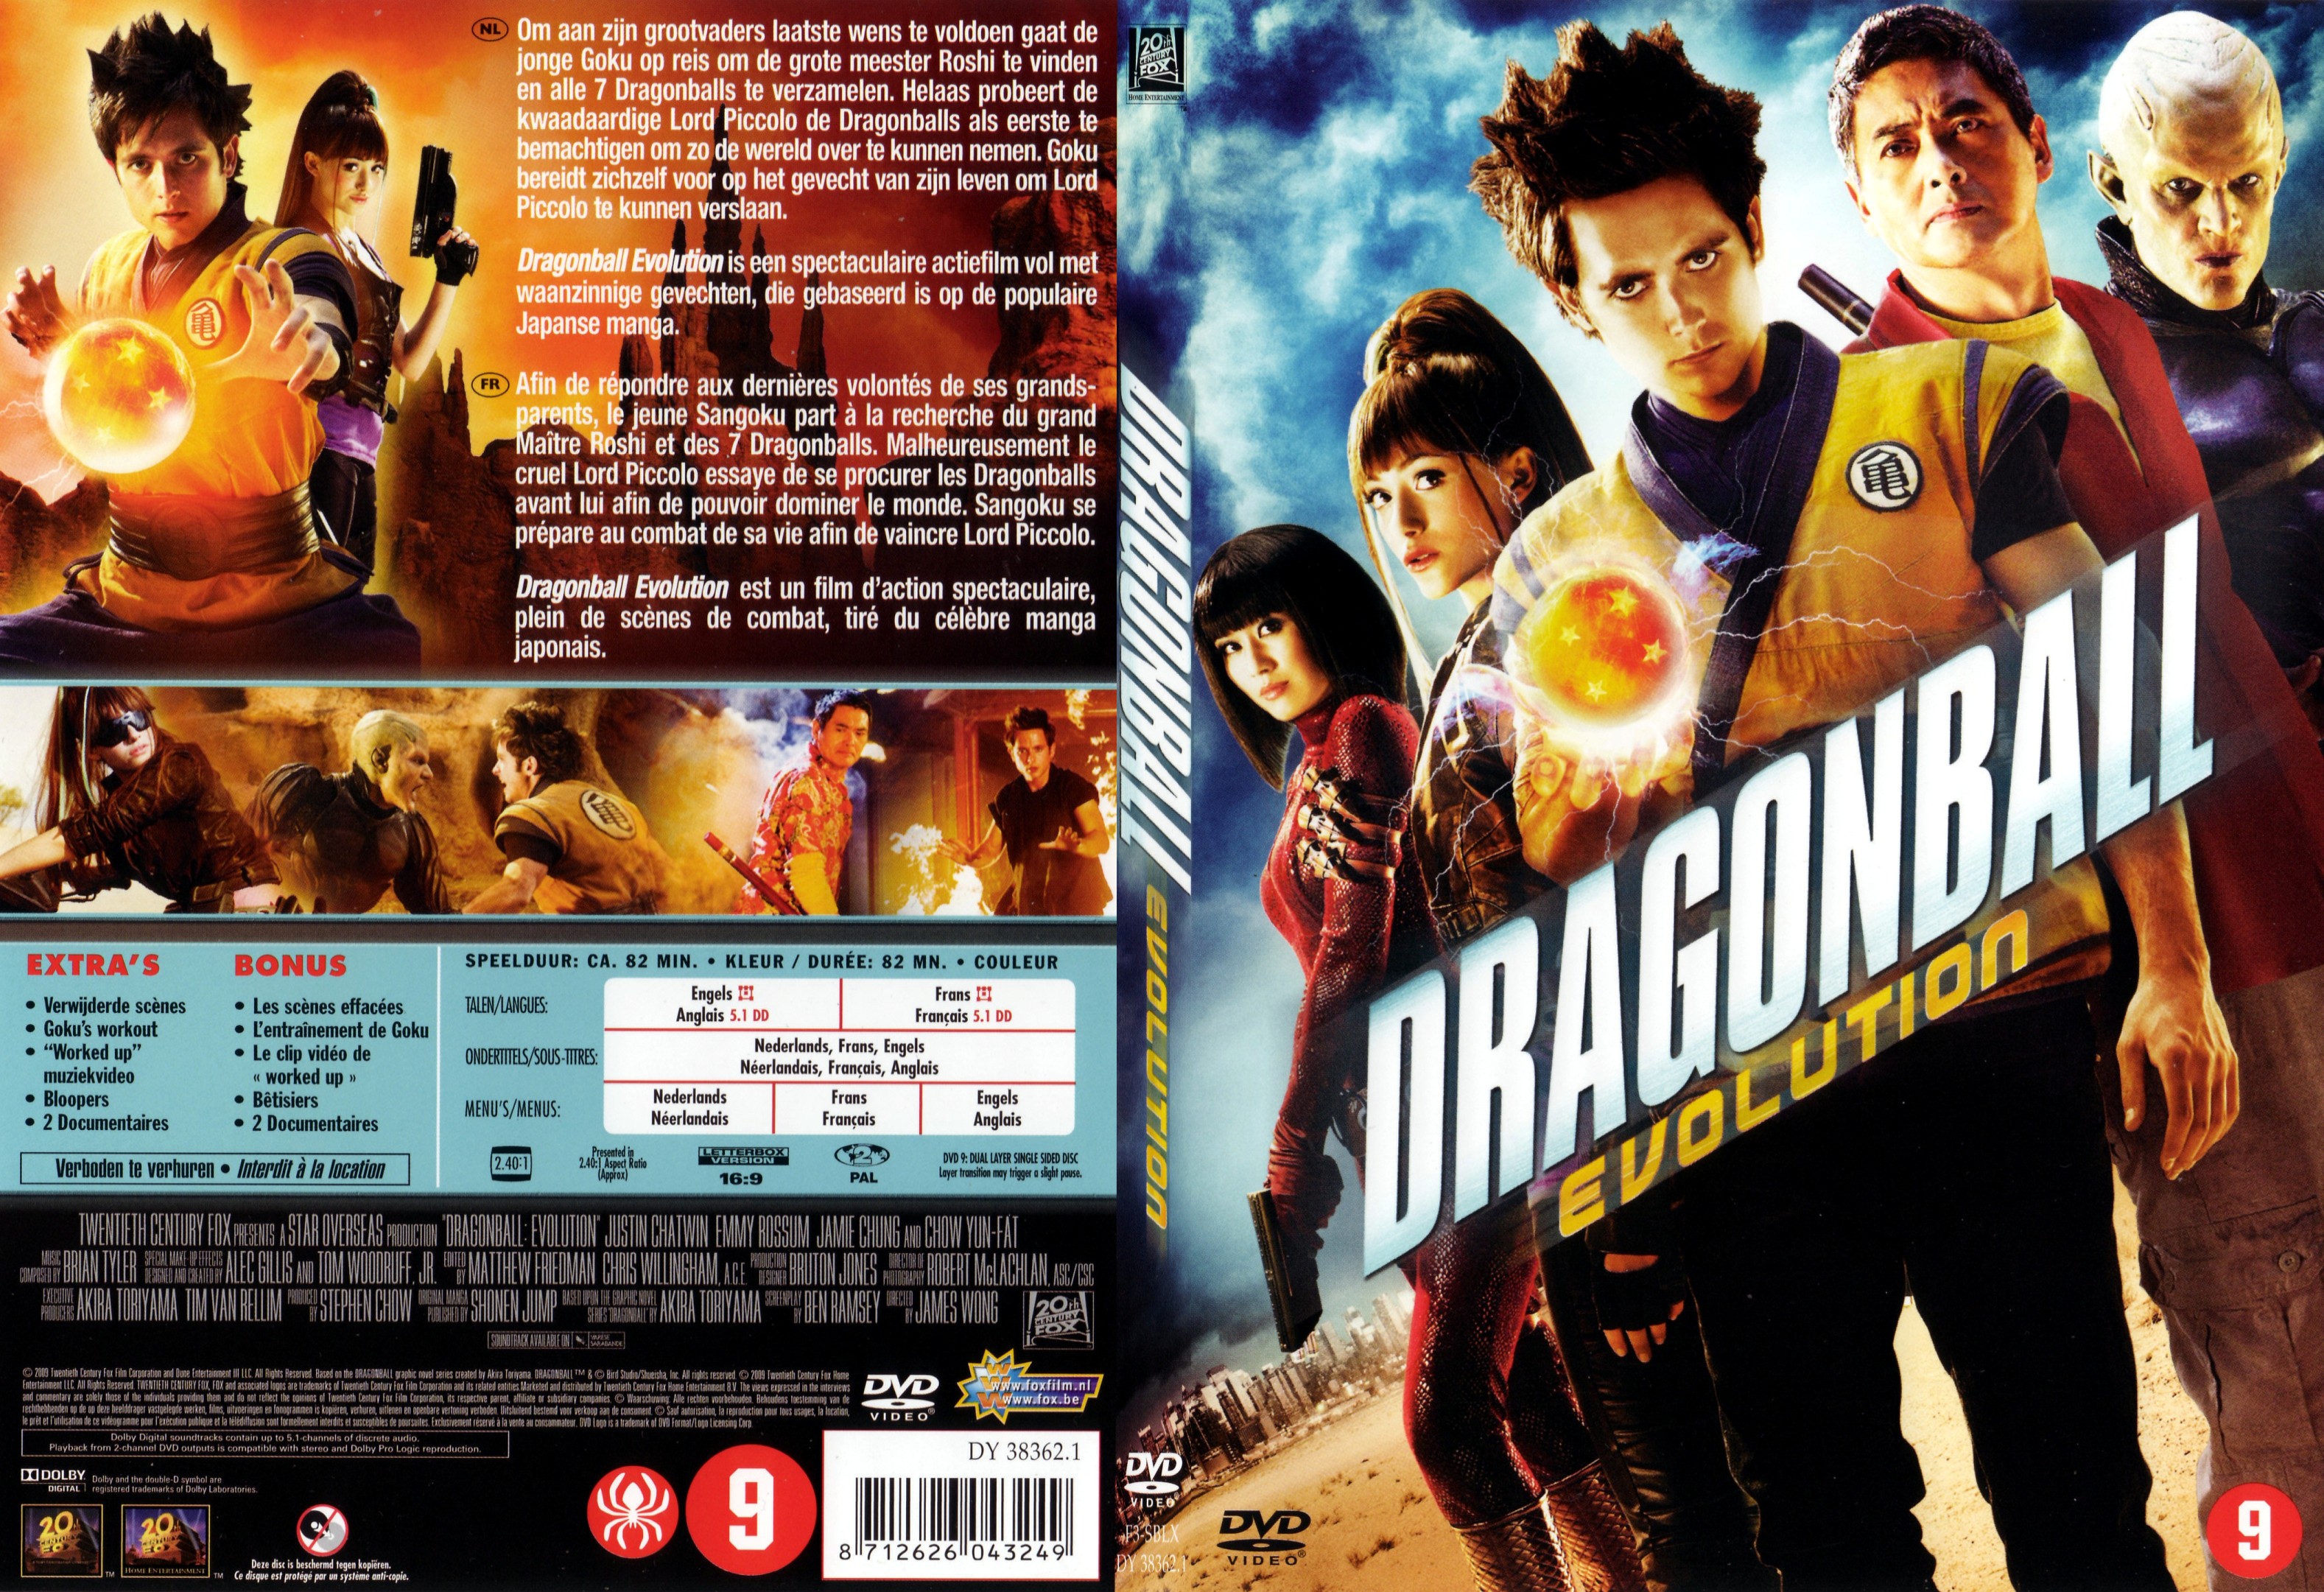 Jaquette DVD Dragonball evolution - SLIM v2